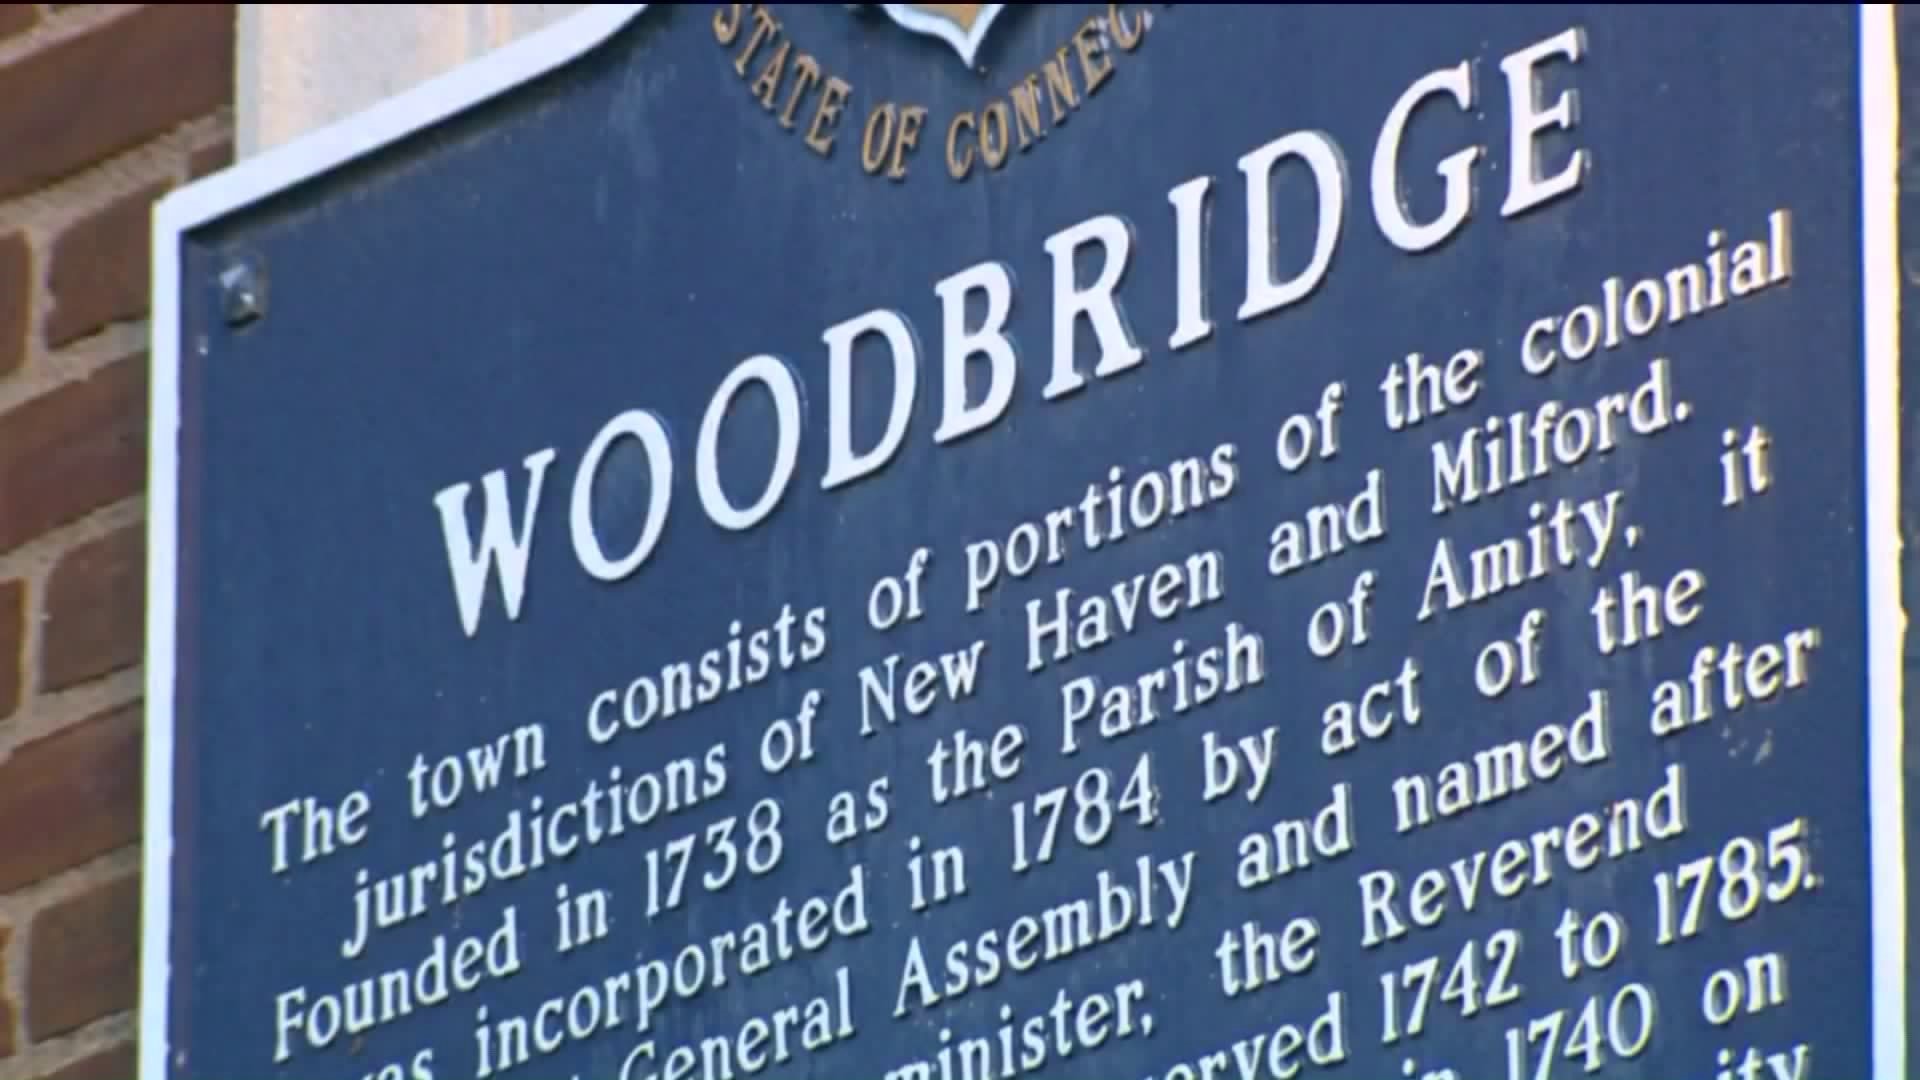 Woodbridge bans guns from public property